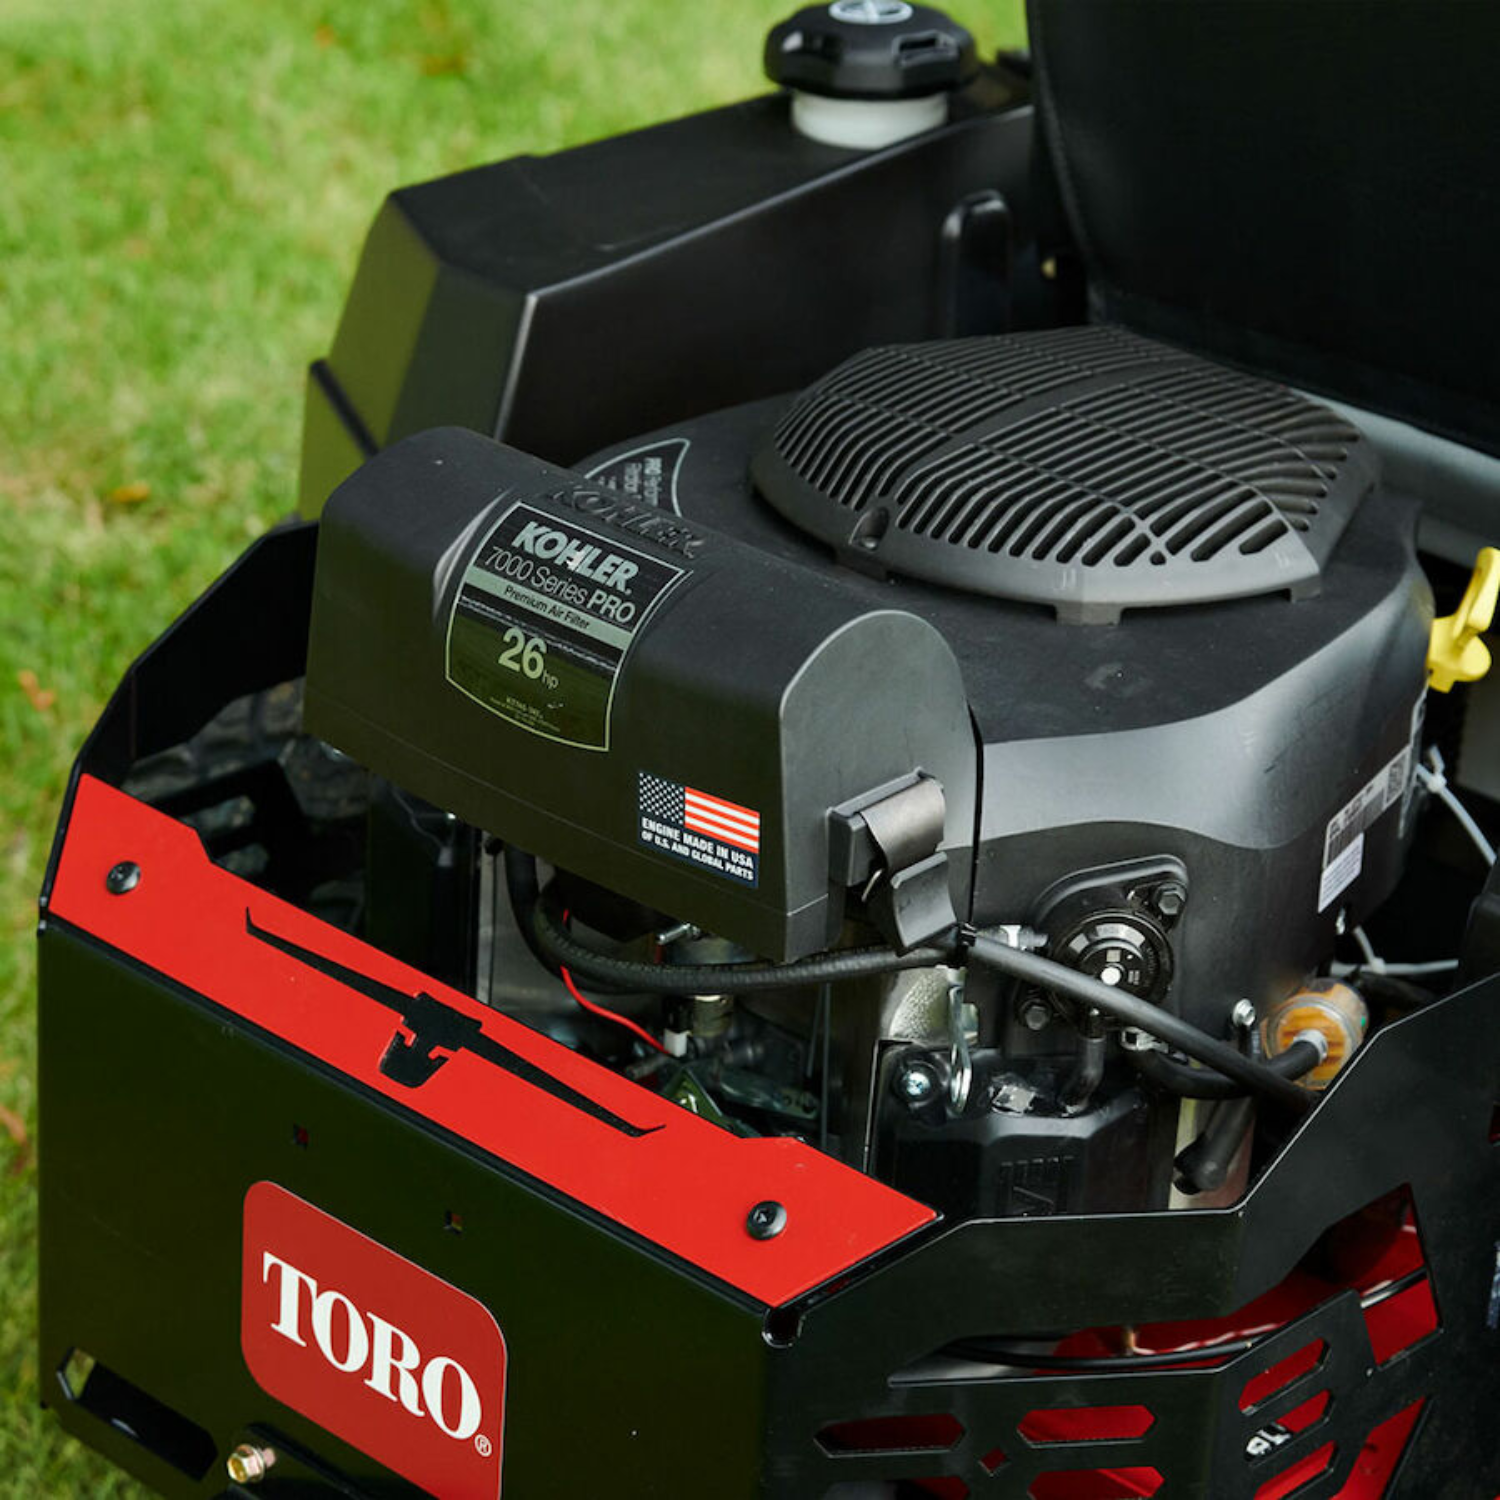 Toro Titan 60 in Kohler 26 hp Zero Turn Mower